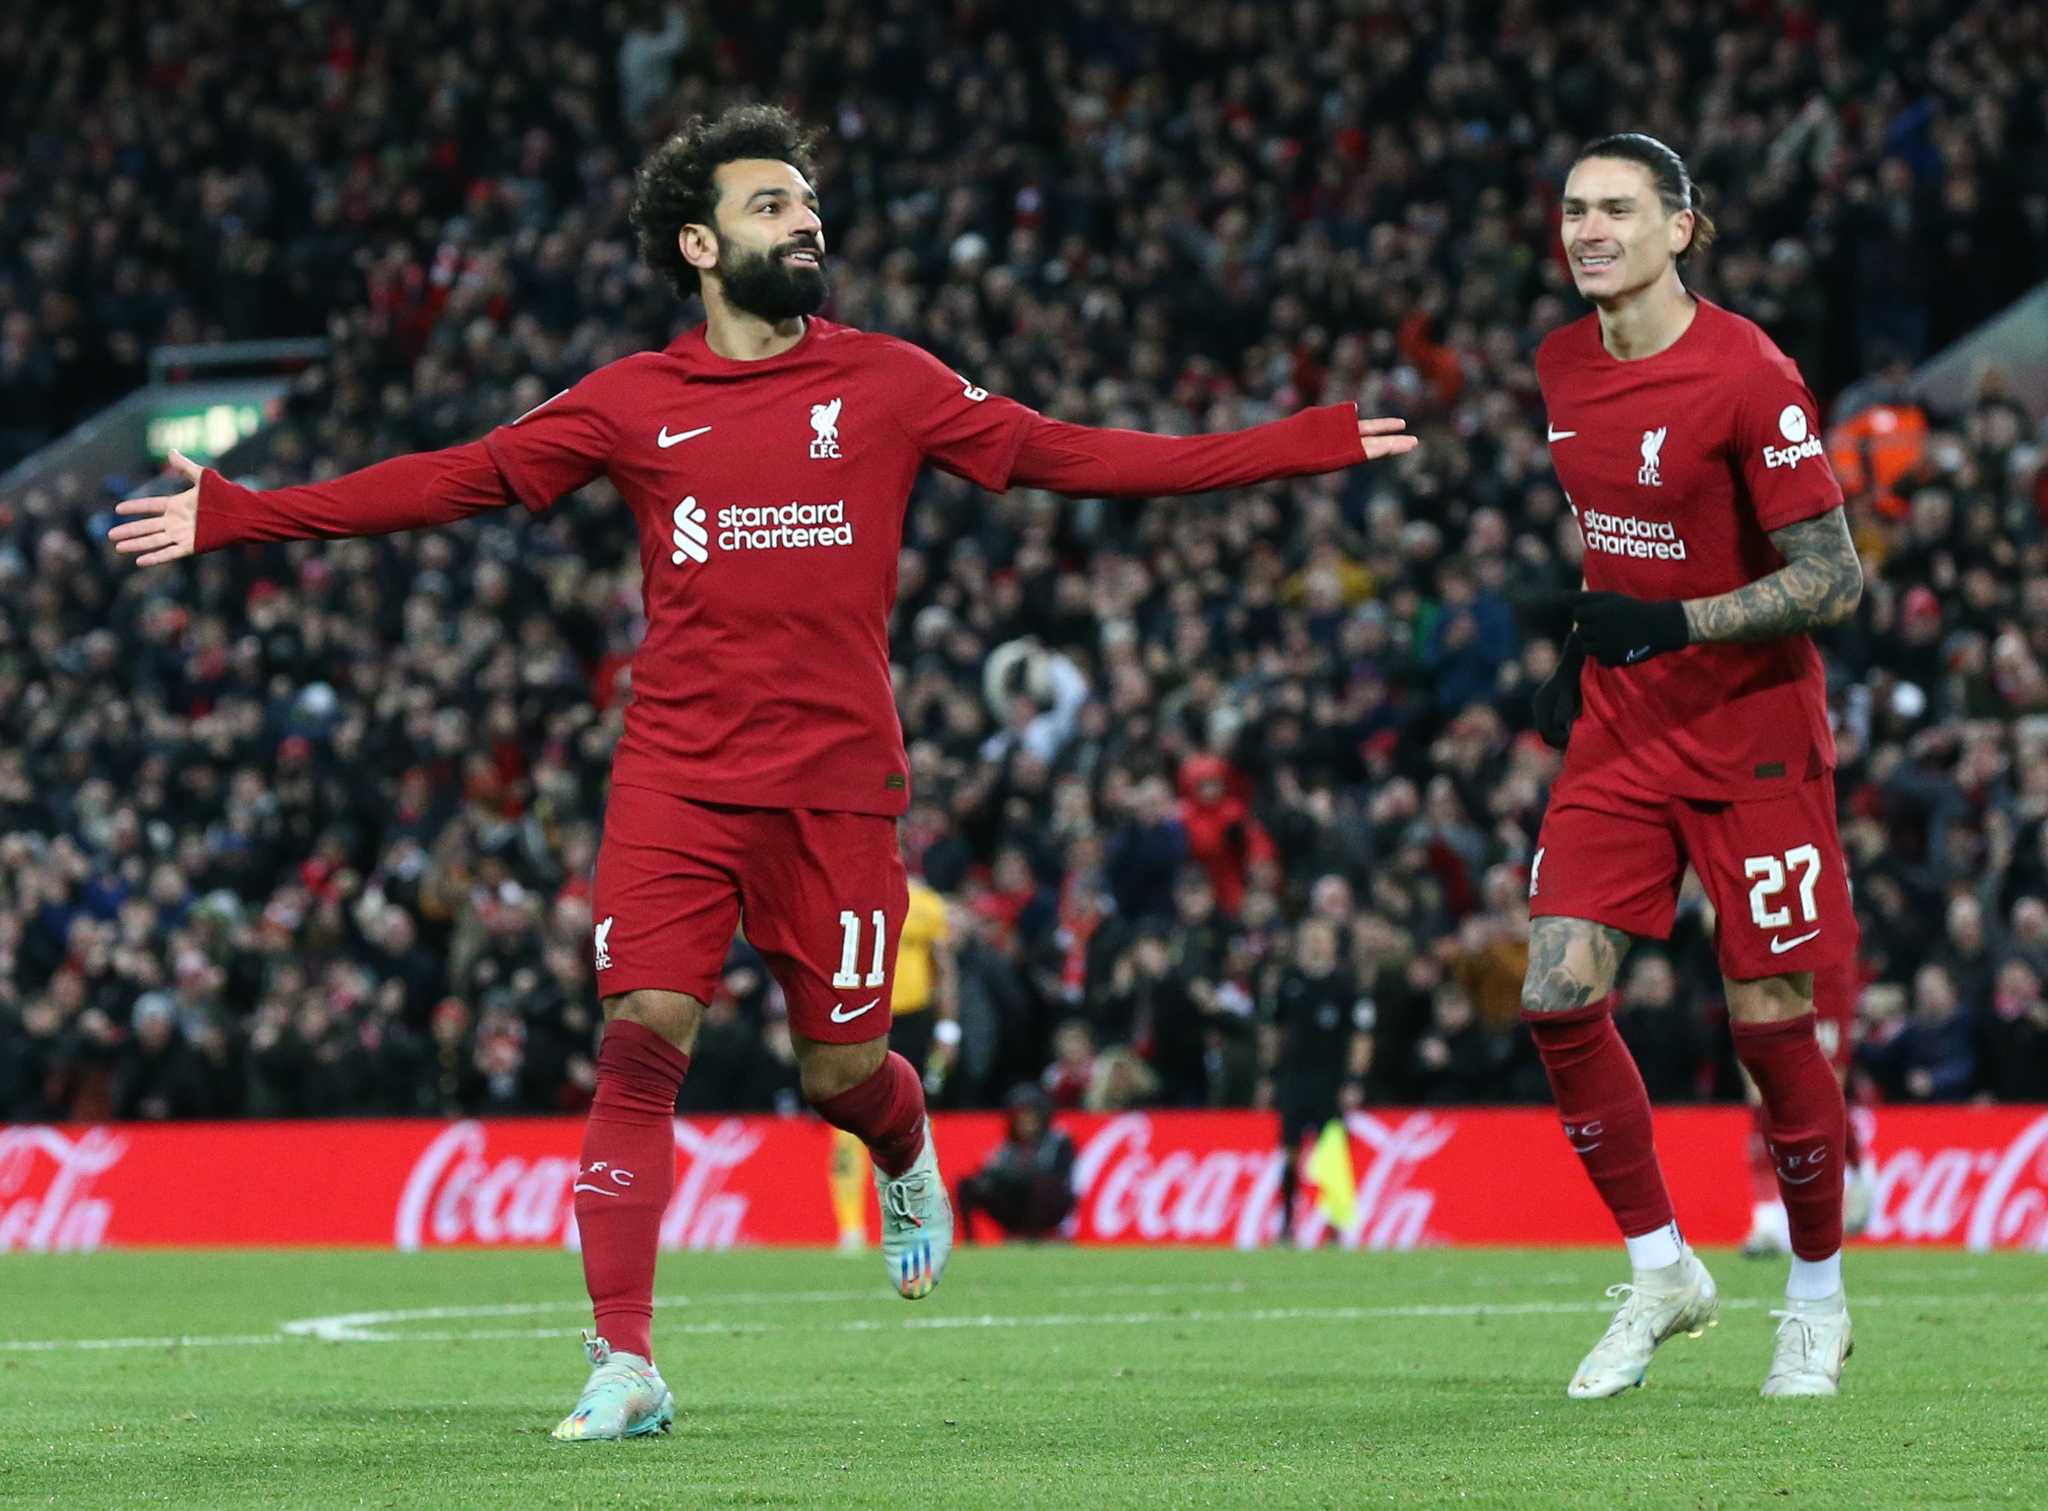 Mohamed Salah celebrates scoring